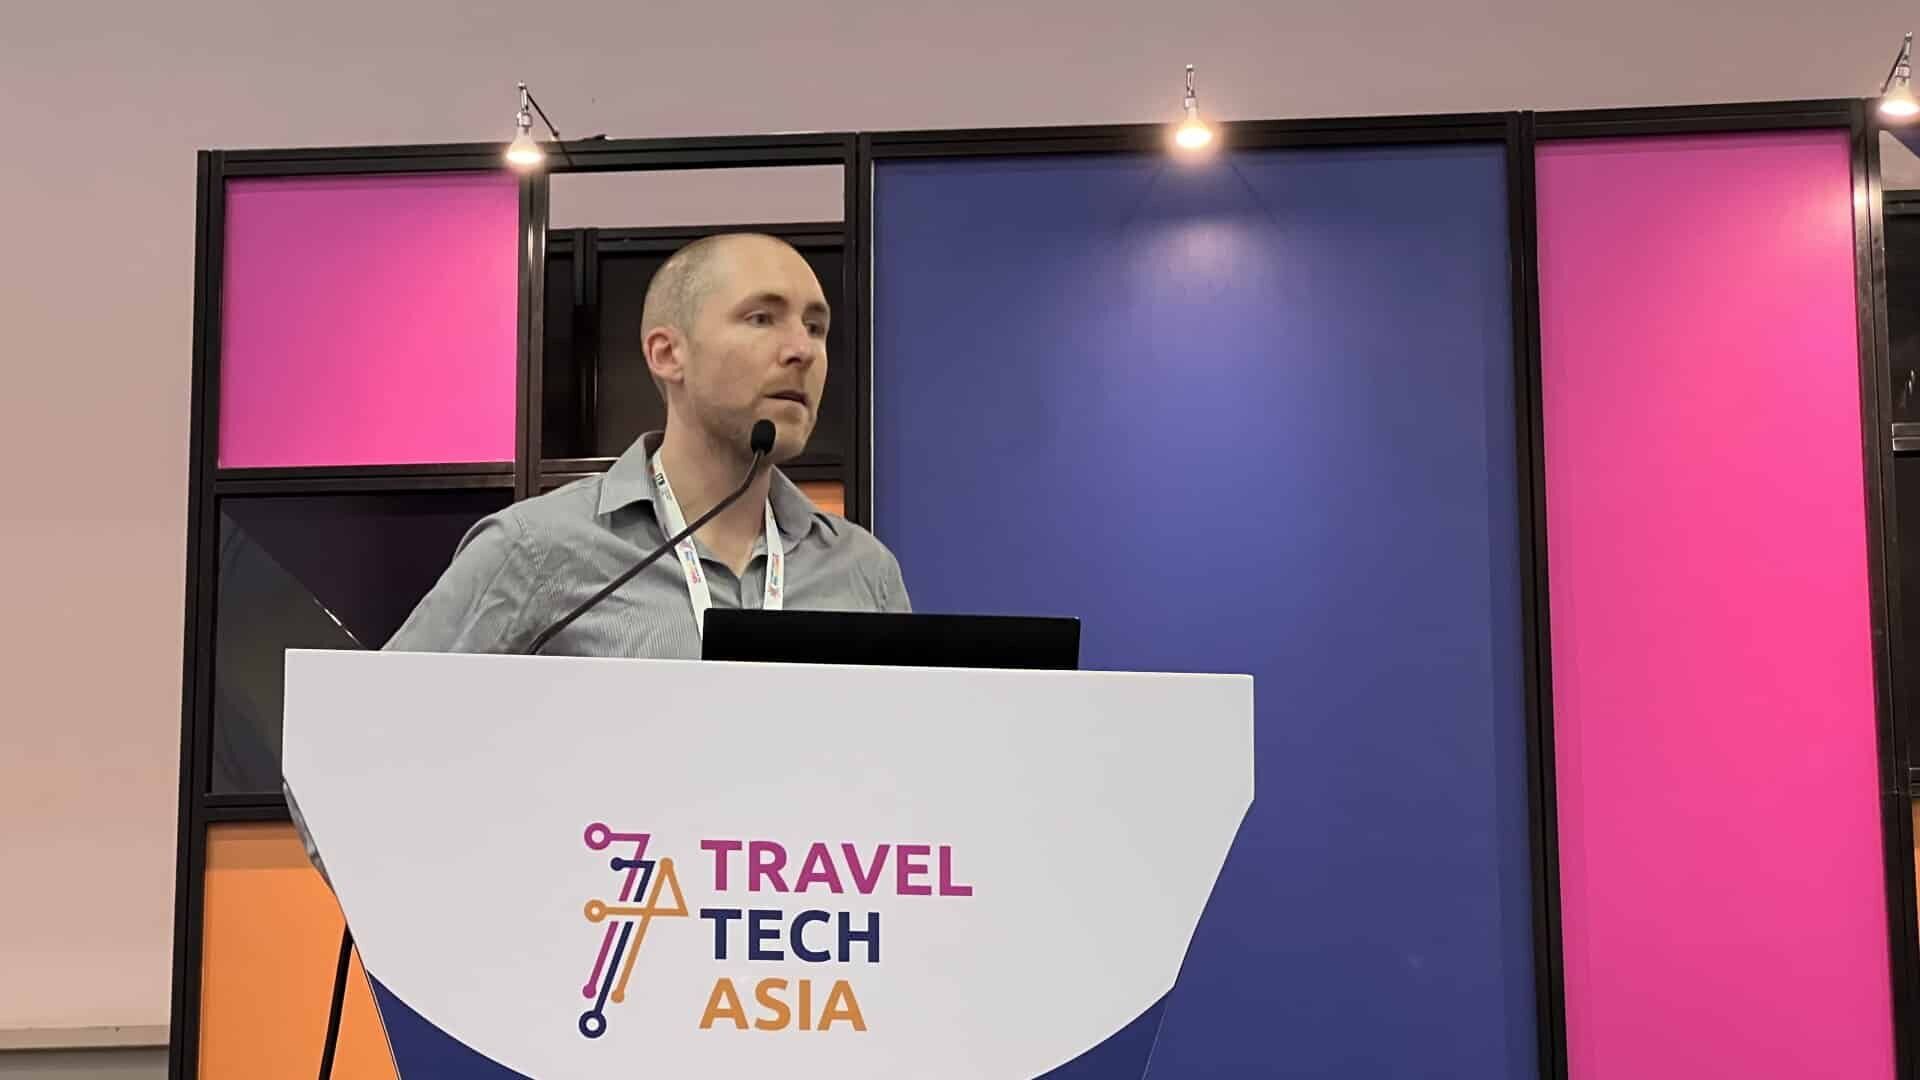 Andreas Köster from Garamantis presents imersive travel technologies at ITB Asia